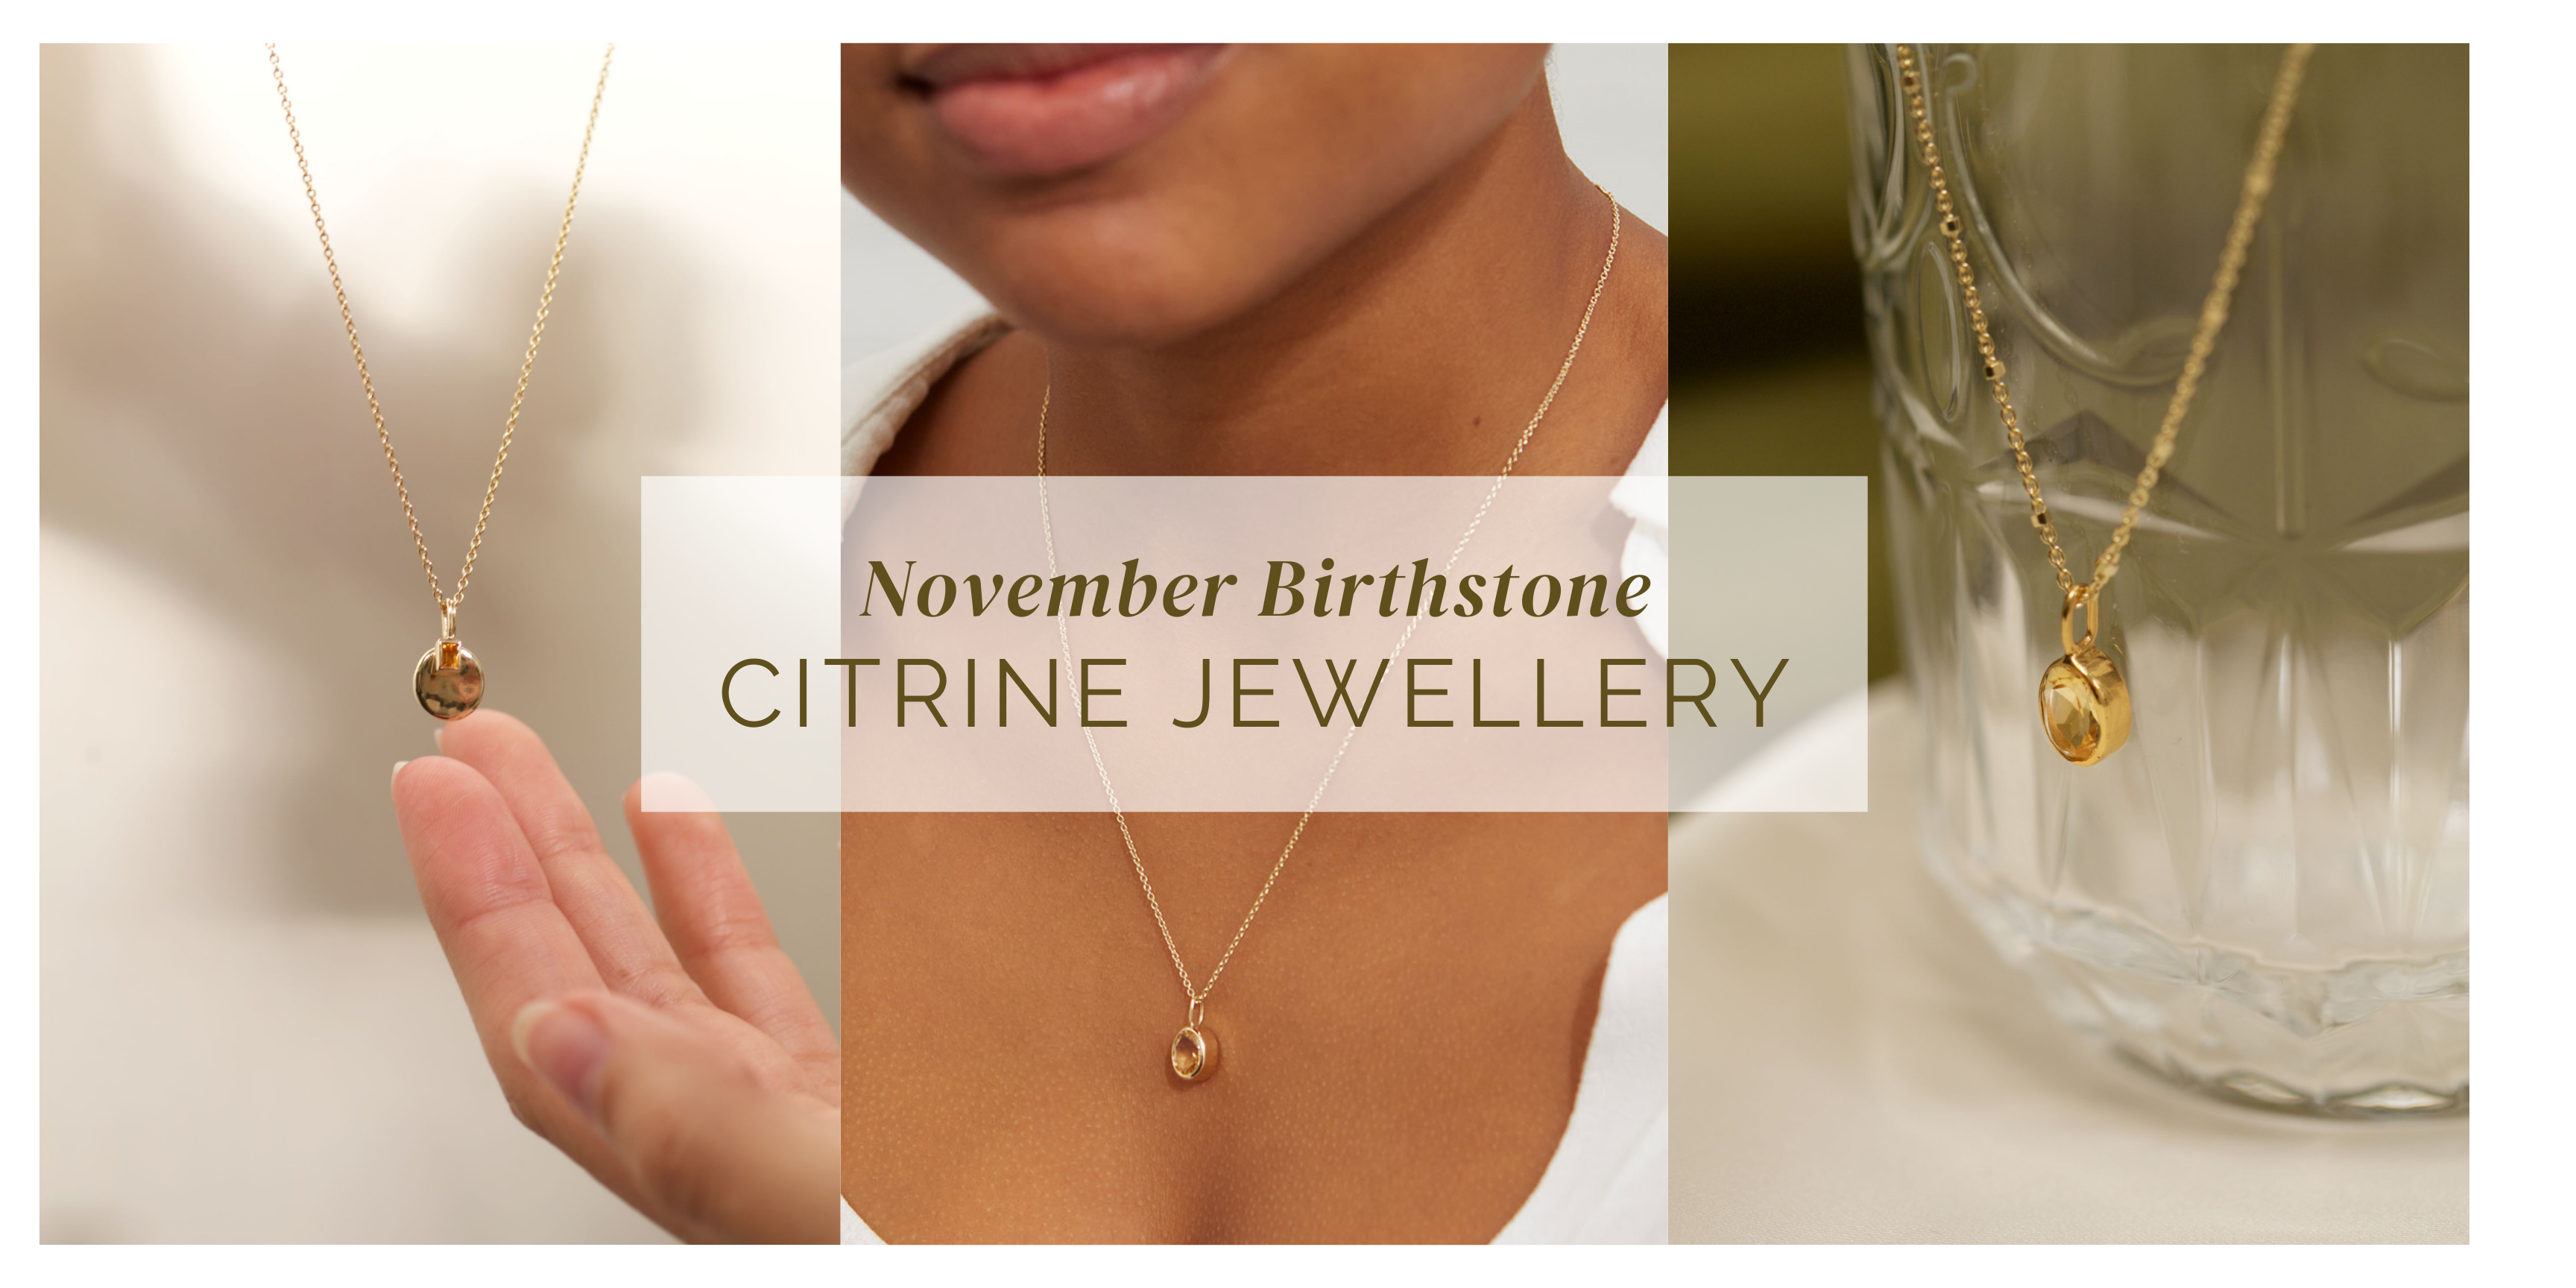 citrine jewellery november birthstone by london jewellery brand maya magal